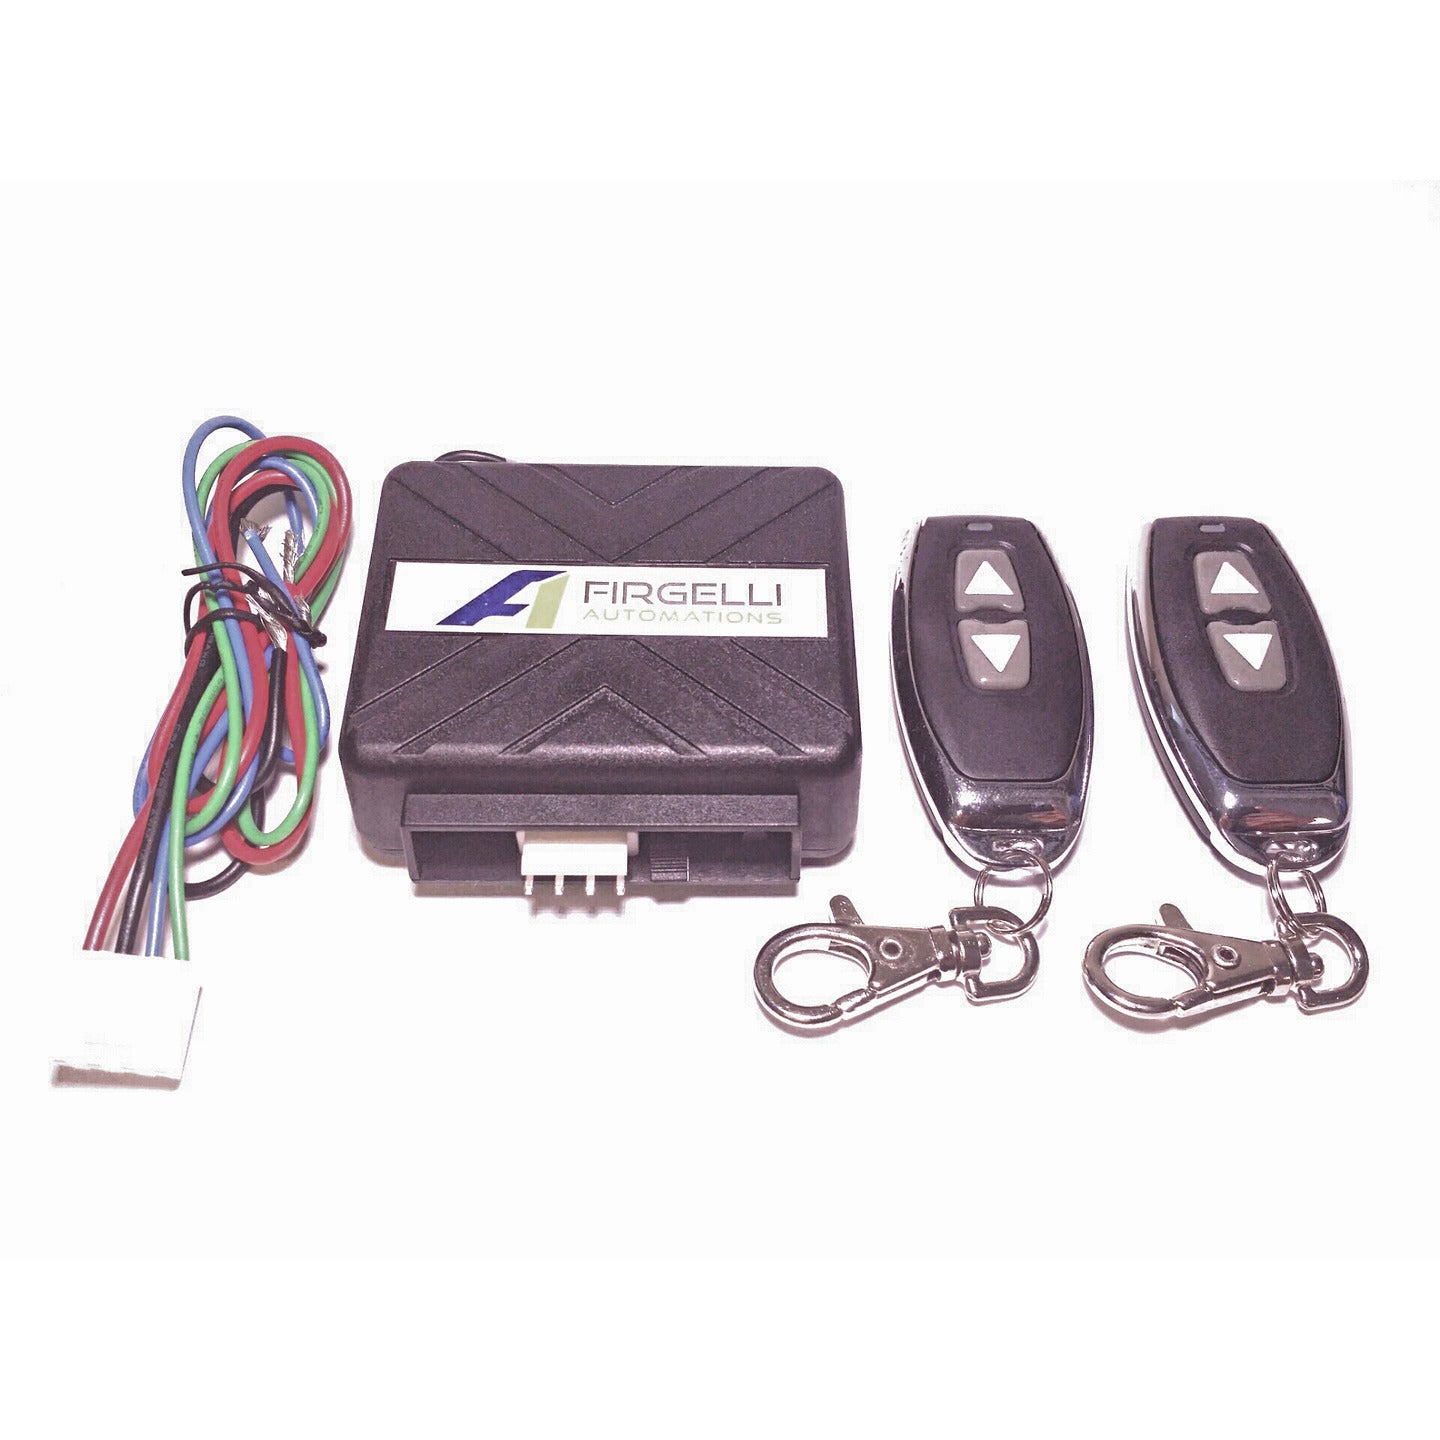 2-kanaals afstandsbedieningssysteem Product Image